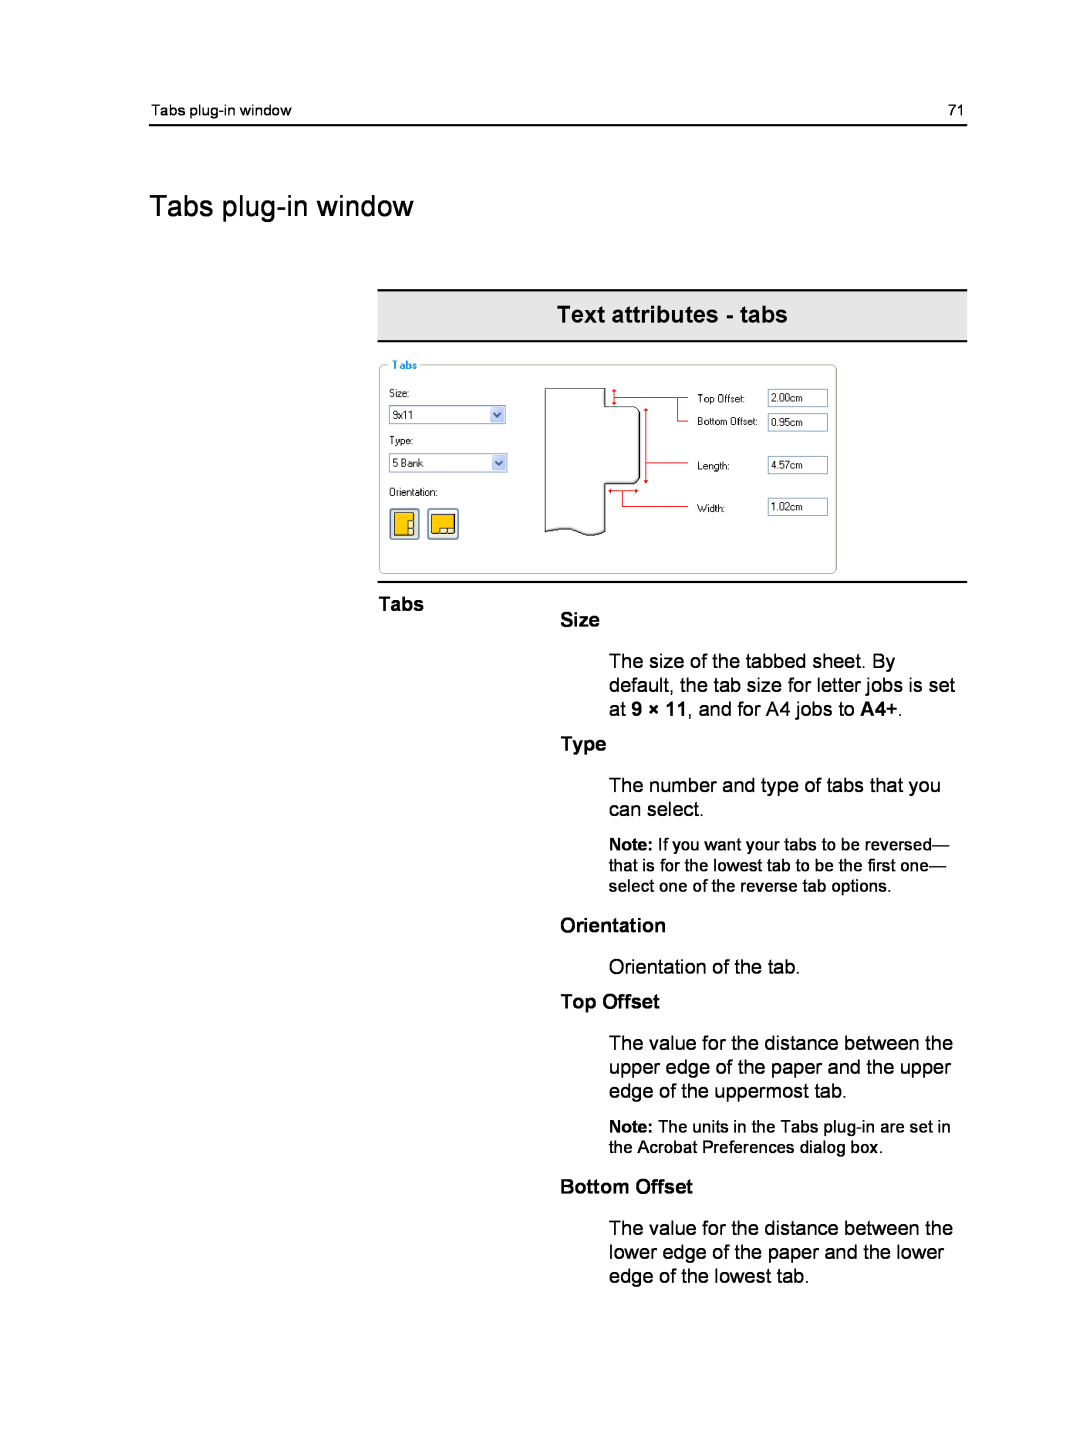 Xerox 550, 560 manual Text attributes - tabs, Tabs Size, Type, Orientation, Top Offset, Bottom Offset 